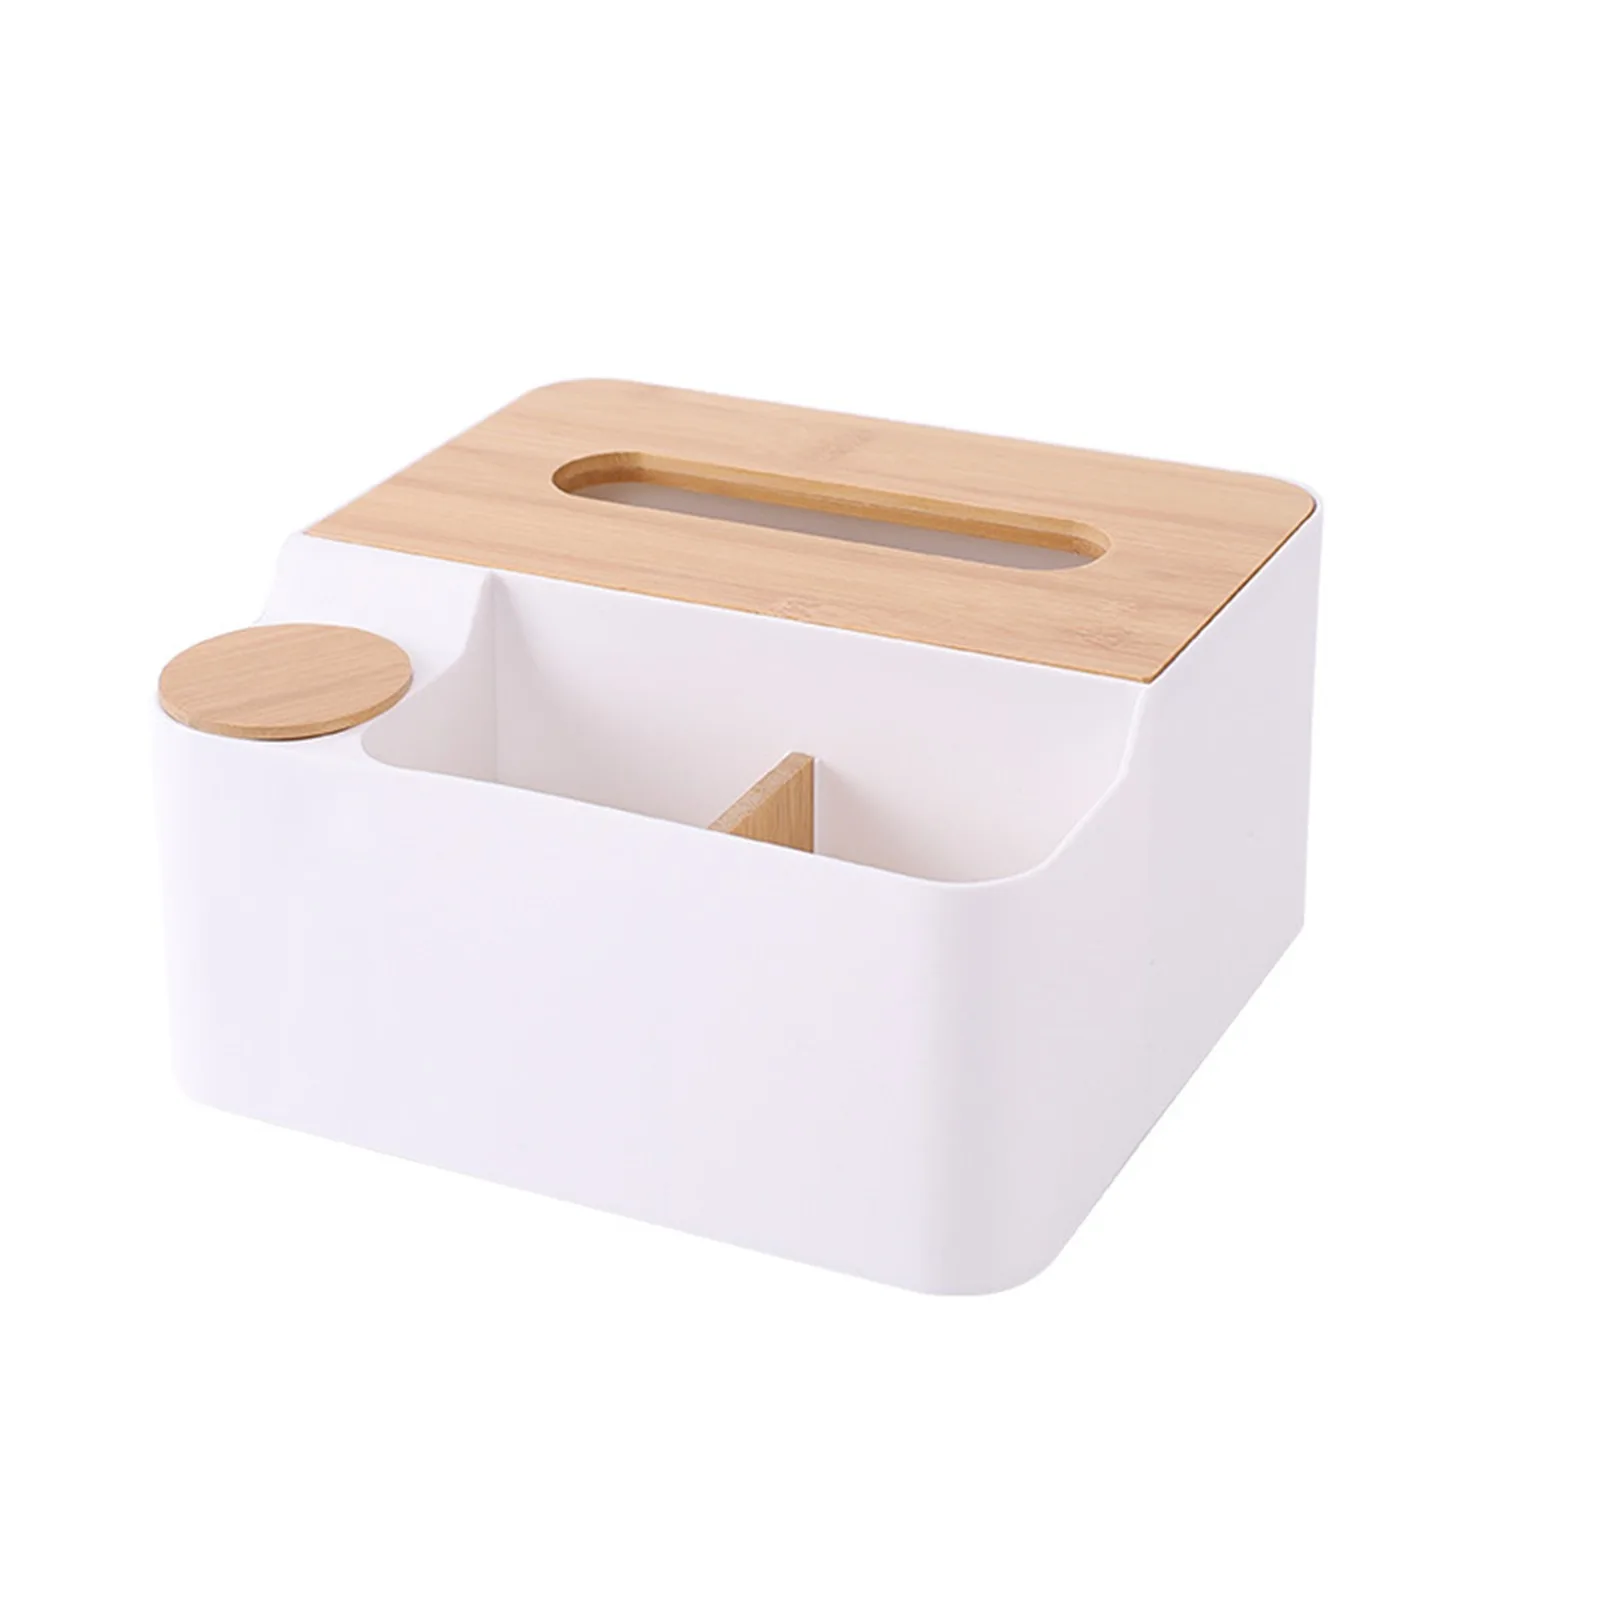 

New Square Tissue Box Creative Wooden Multifunctional Desktop Remote Control Storage Box Plastic Makeup Toiletries Finishing